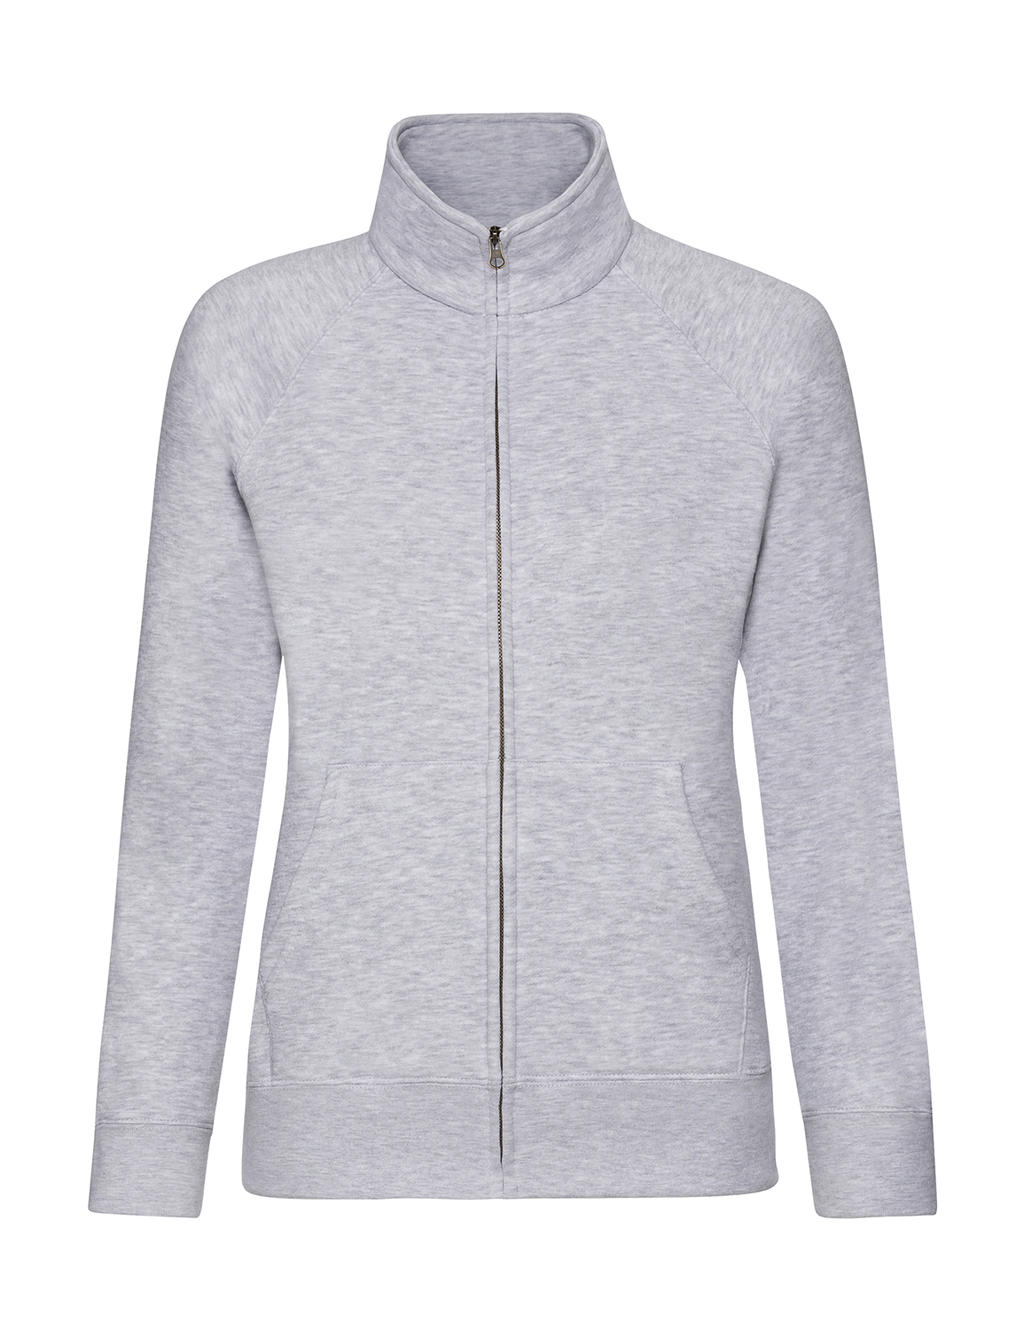  Ladies Premium Sweat Jacket in Farbe Heather Grey